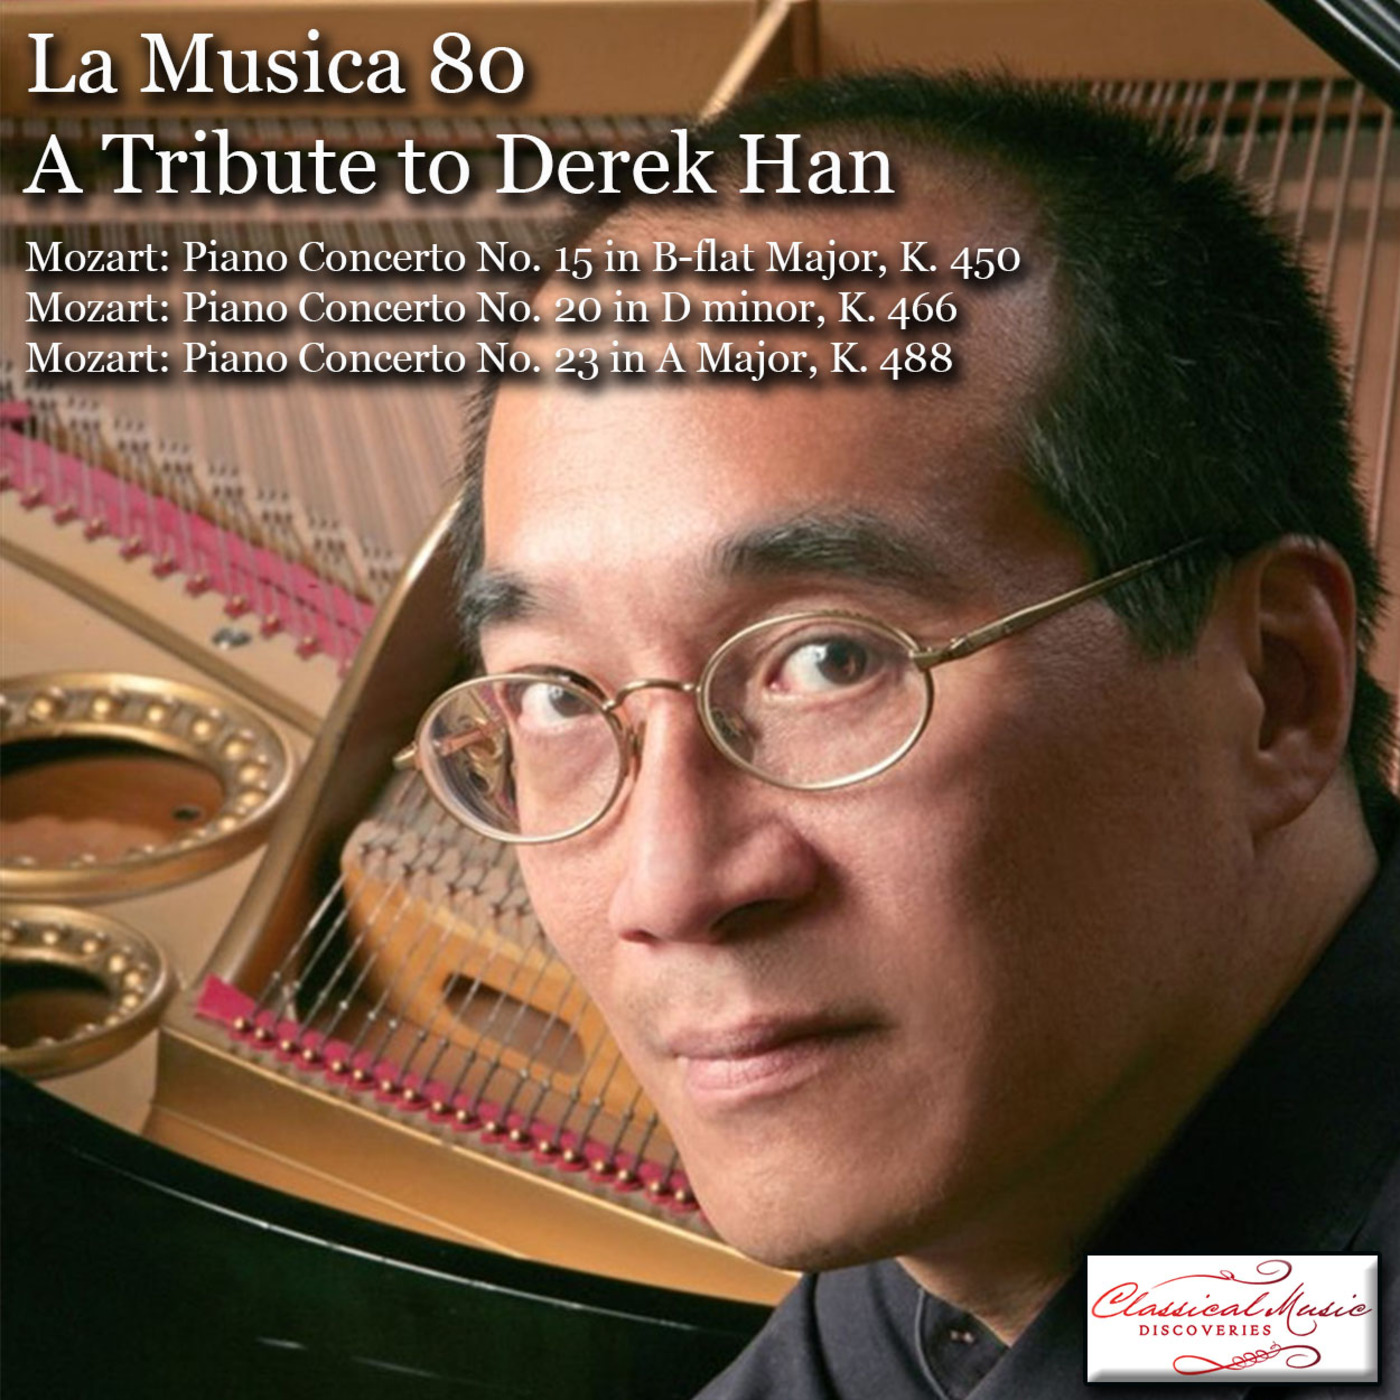 Episode 110: 17110 La Musica 80 - A Tribute to Derek Han